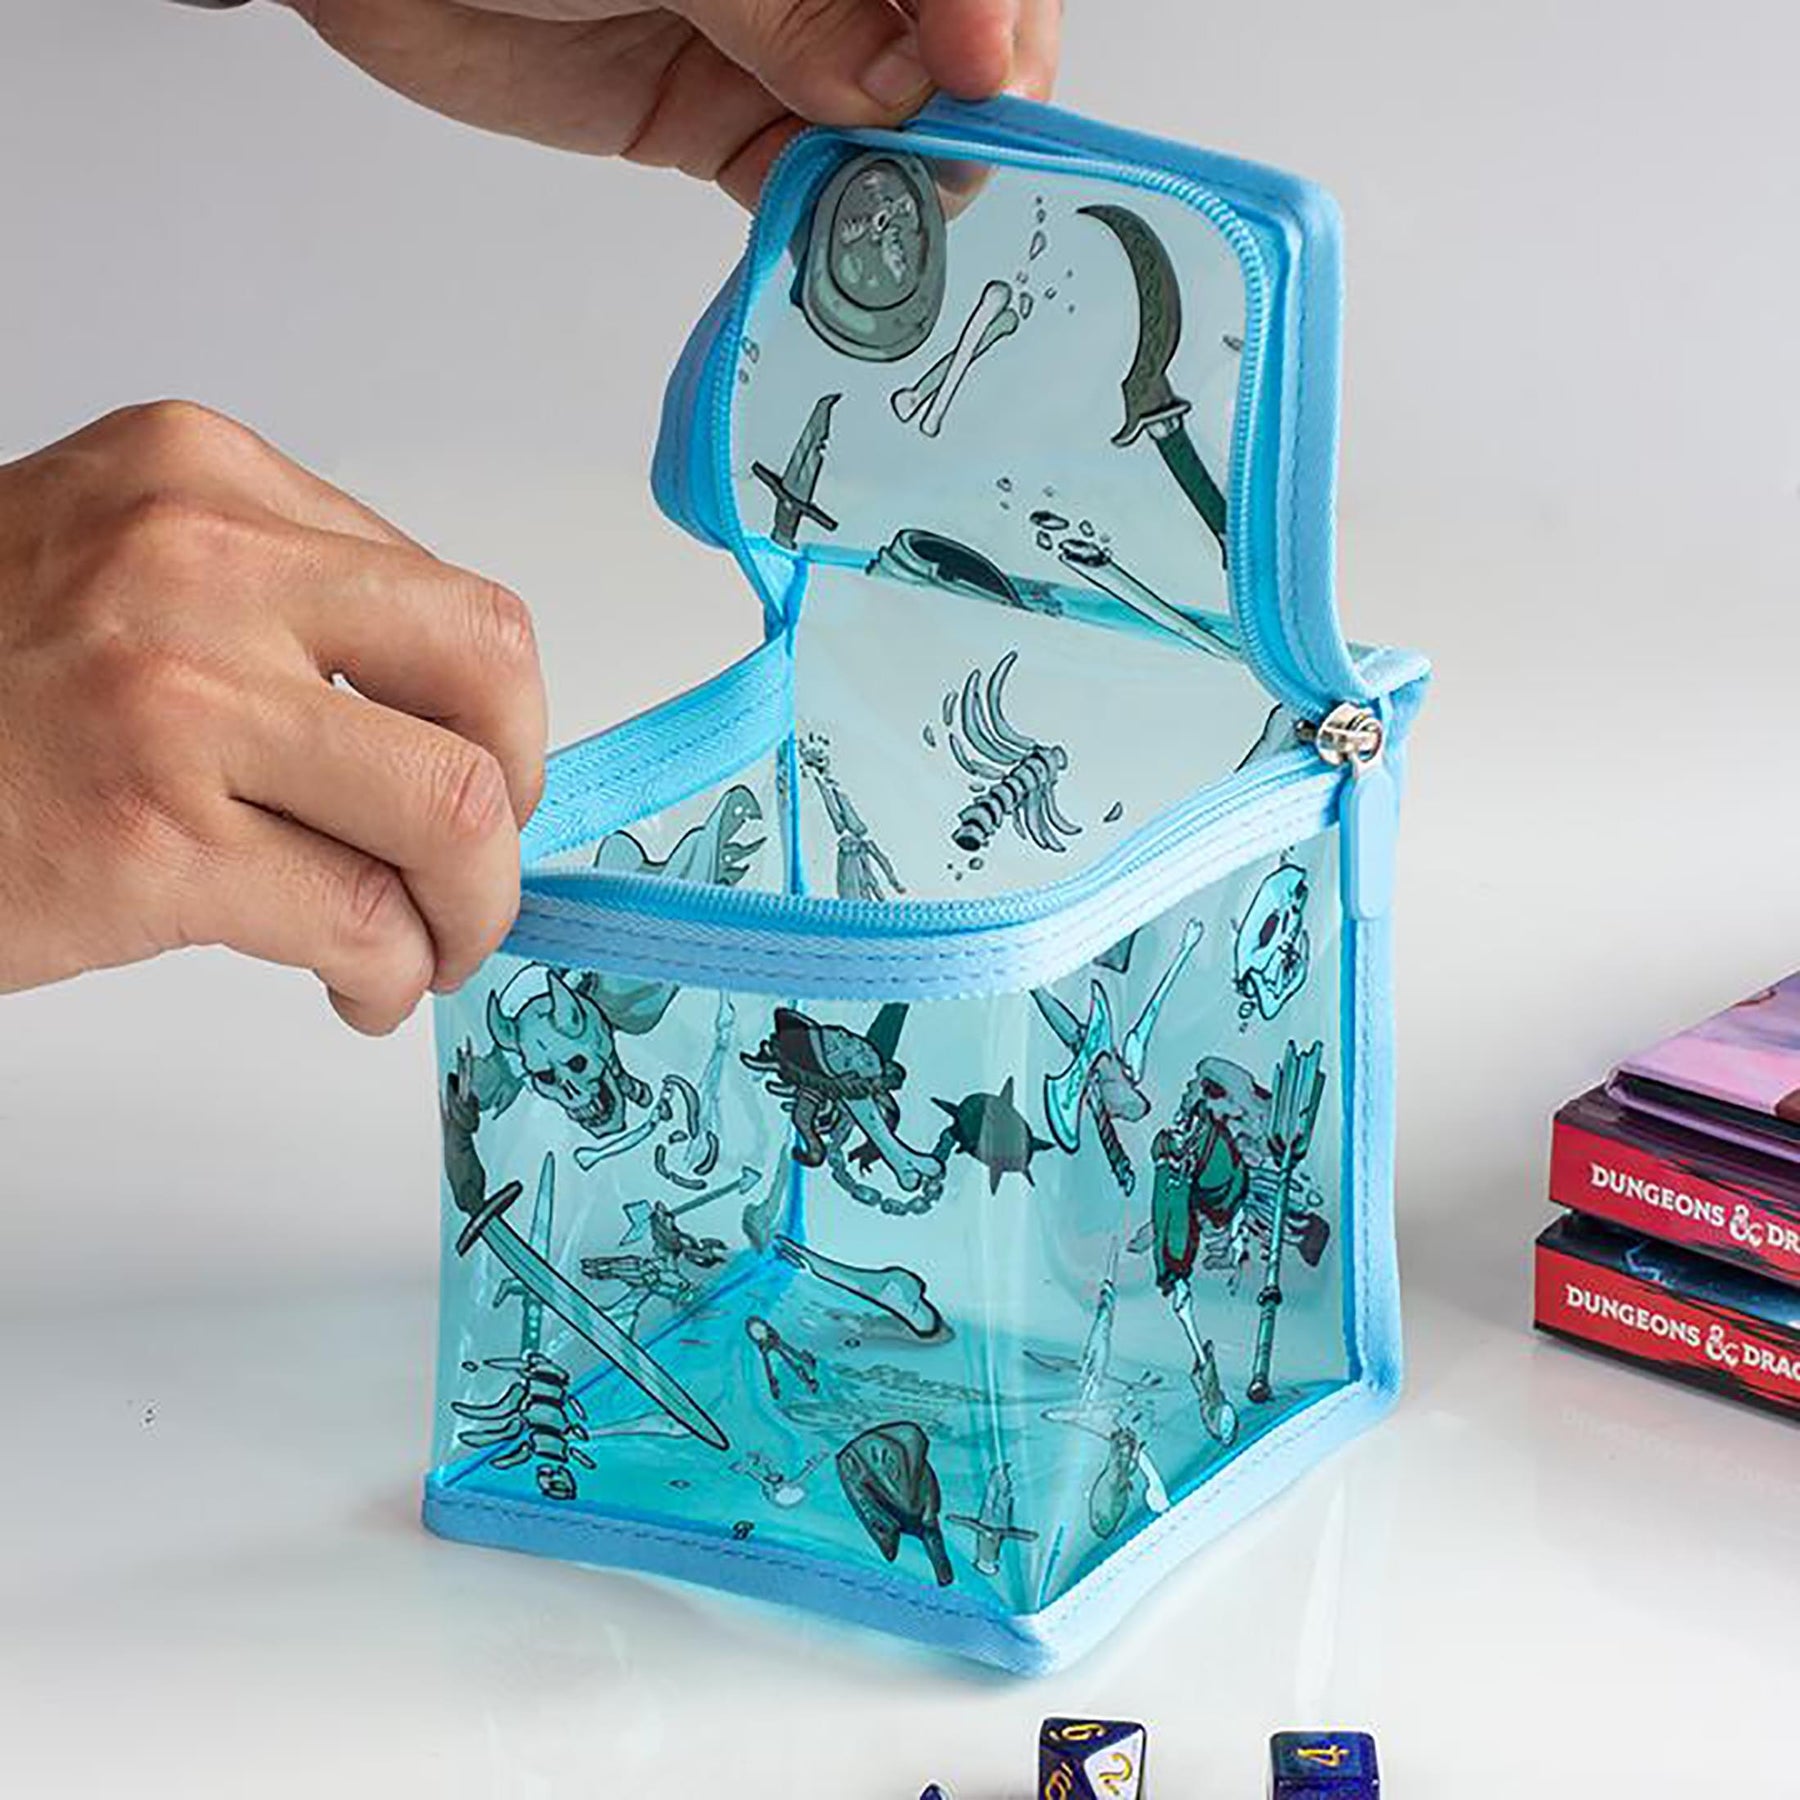 Dungeons & Dragons Gelatinous Cube Dice Bag